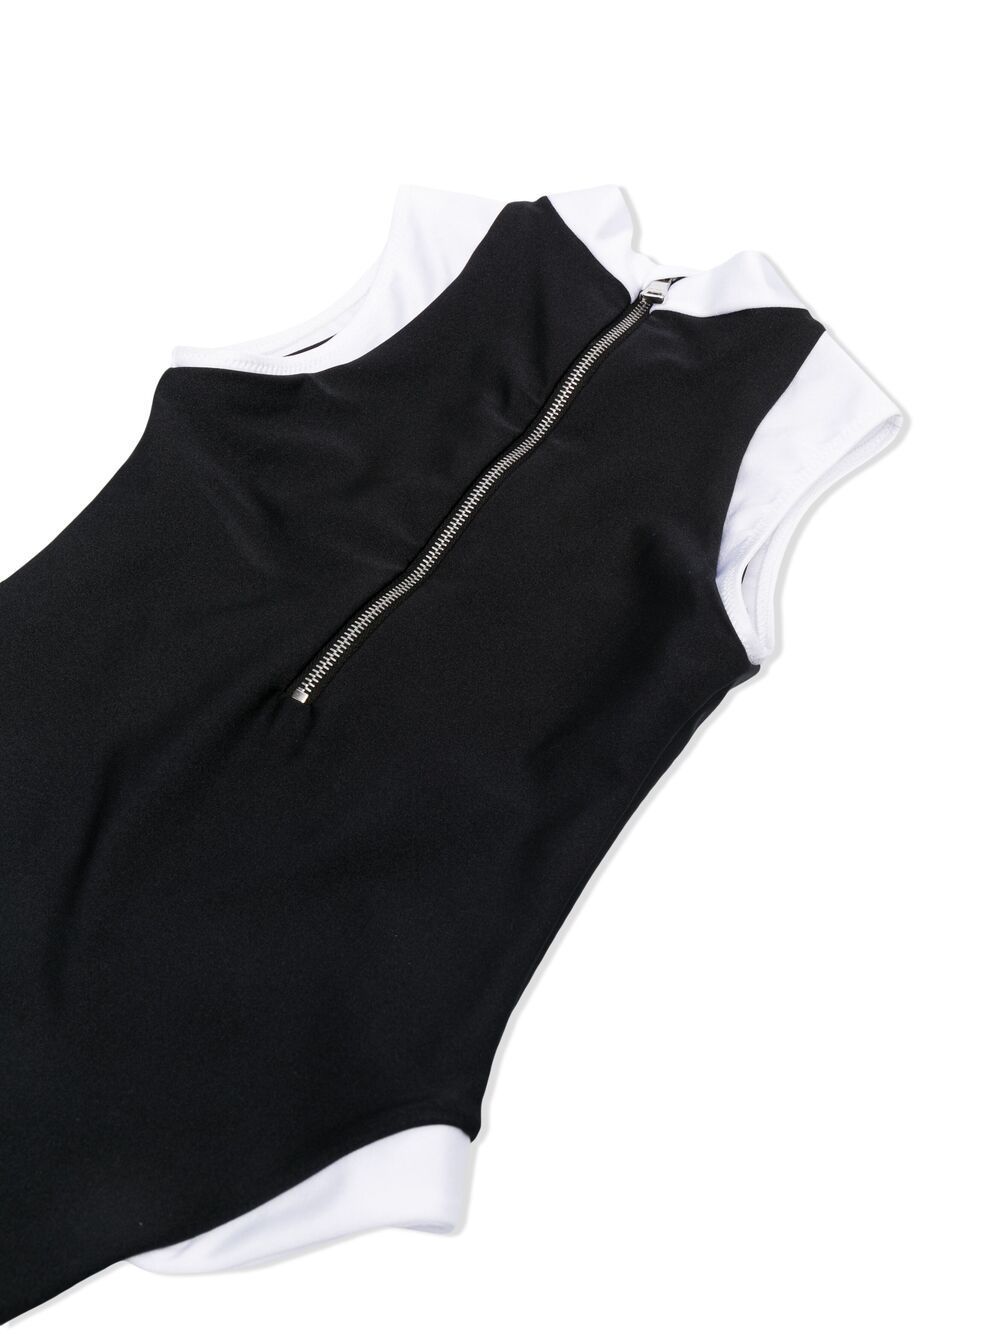 BALMAIN Two-tone logo print swimsuit Black - MAISONDEFASHION.COM